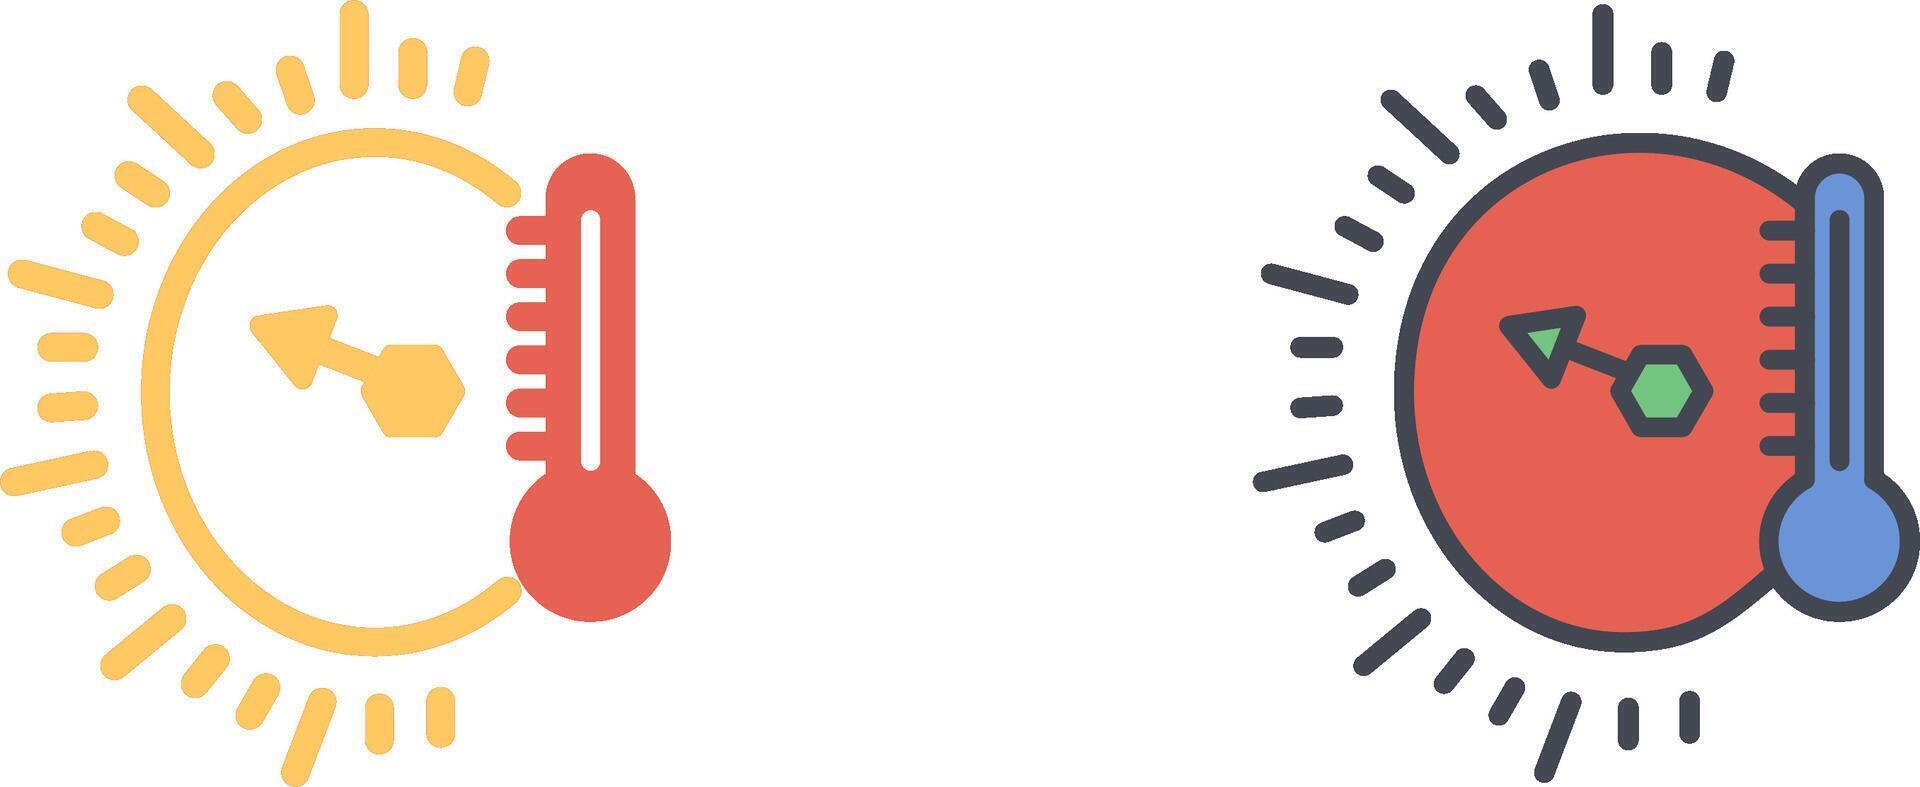 Temperature Indicator Icon Design vector